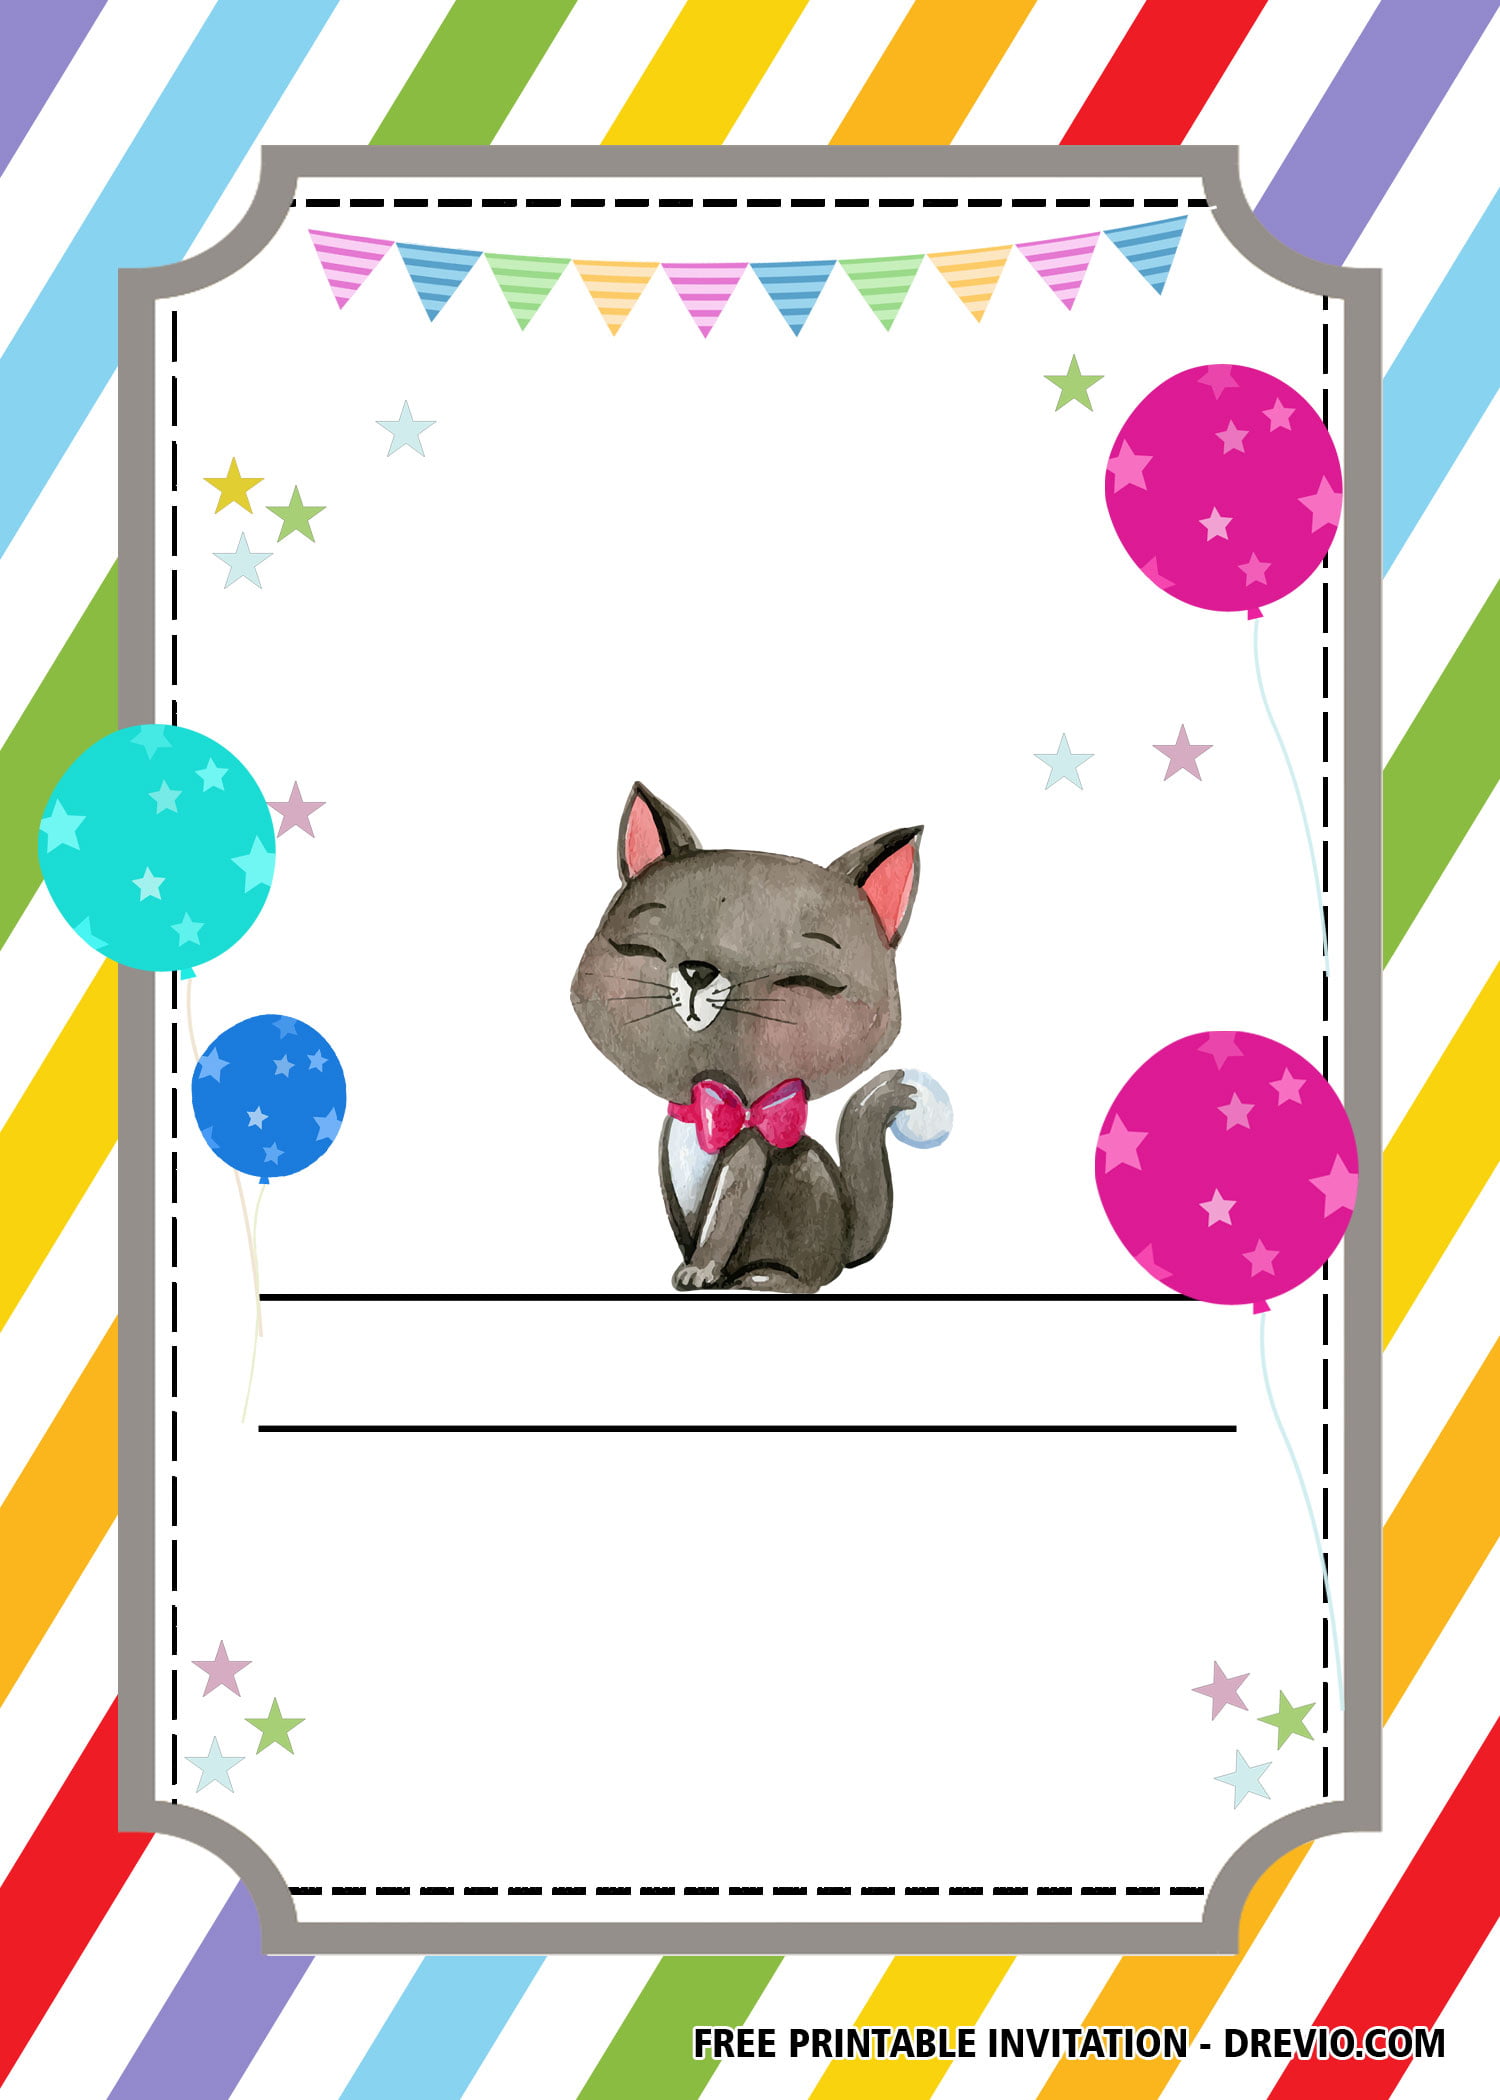 Free Printable Cat Party Invitation Templates Download Hundreds Free Printable Birthday Invitation Templates